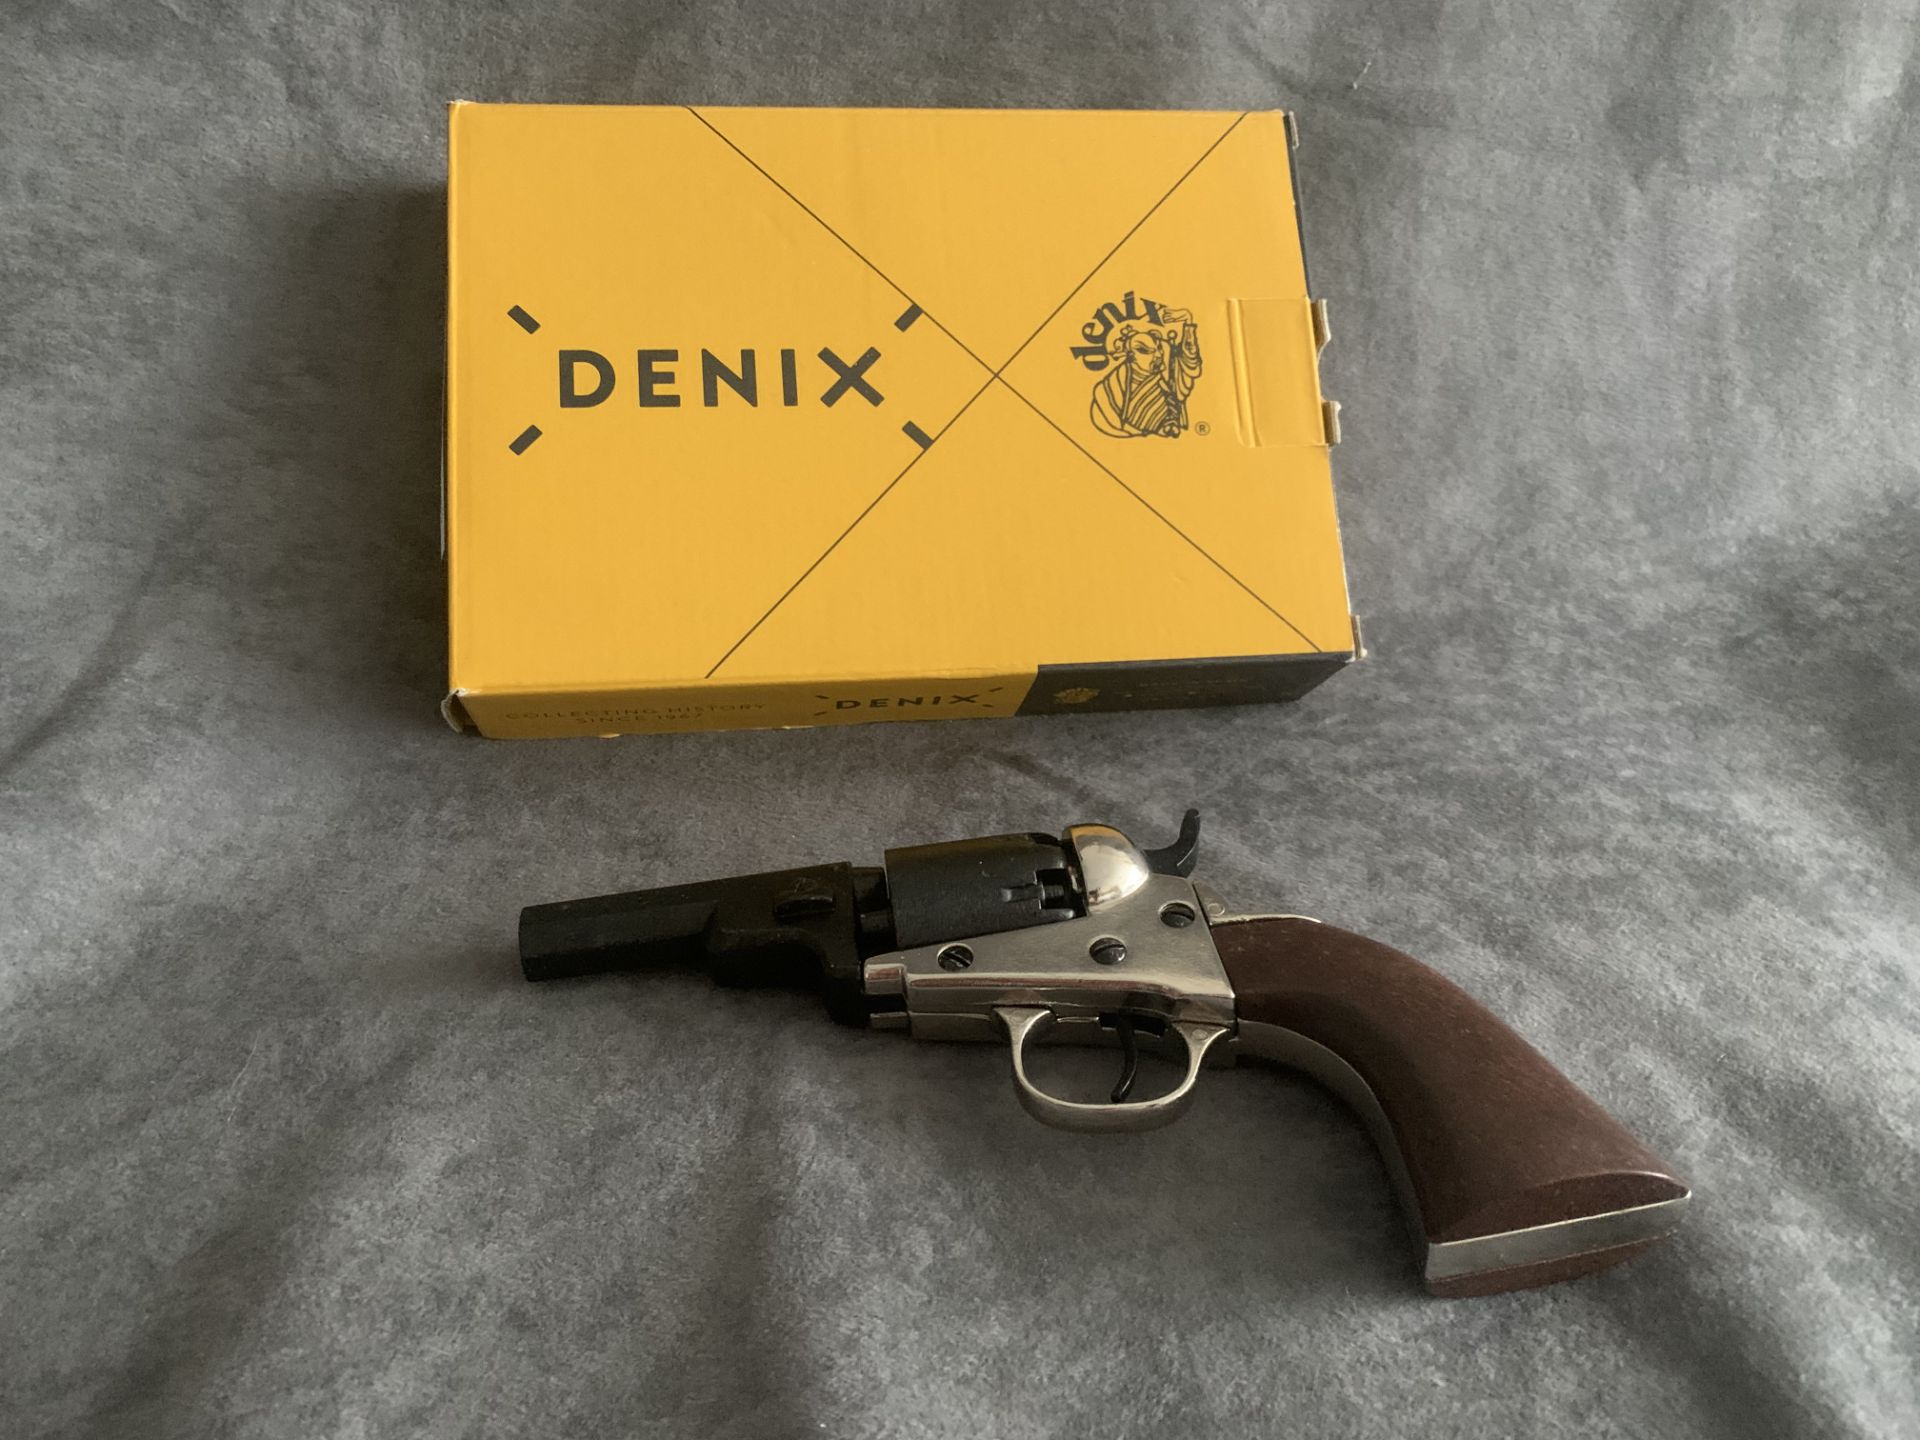 Denix Replicas 1259/NQ Wells Fargo Revolver Designed By S Colt USA 1849 Non-Firing Replica These